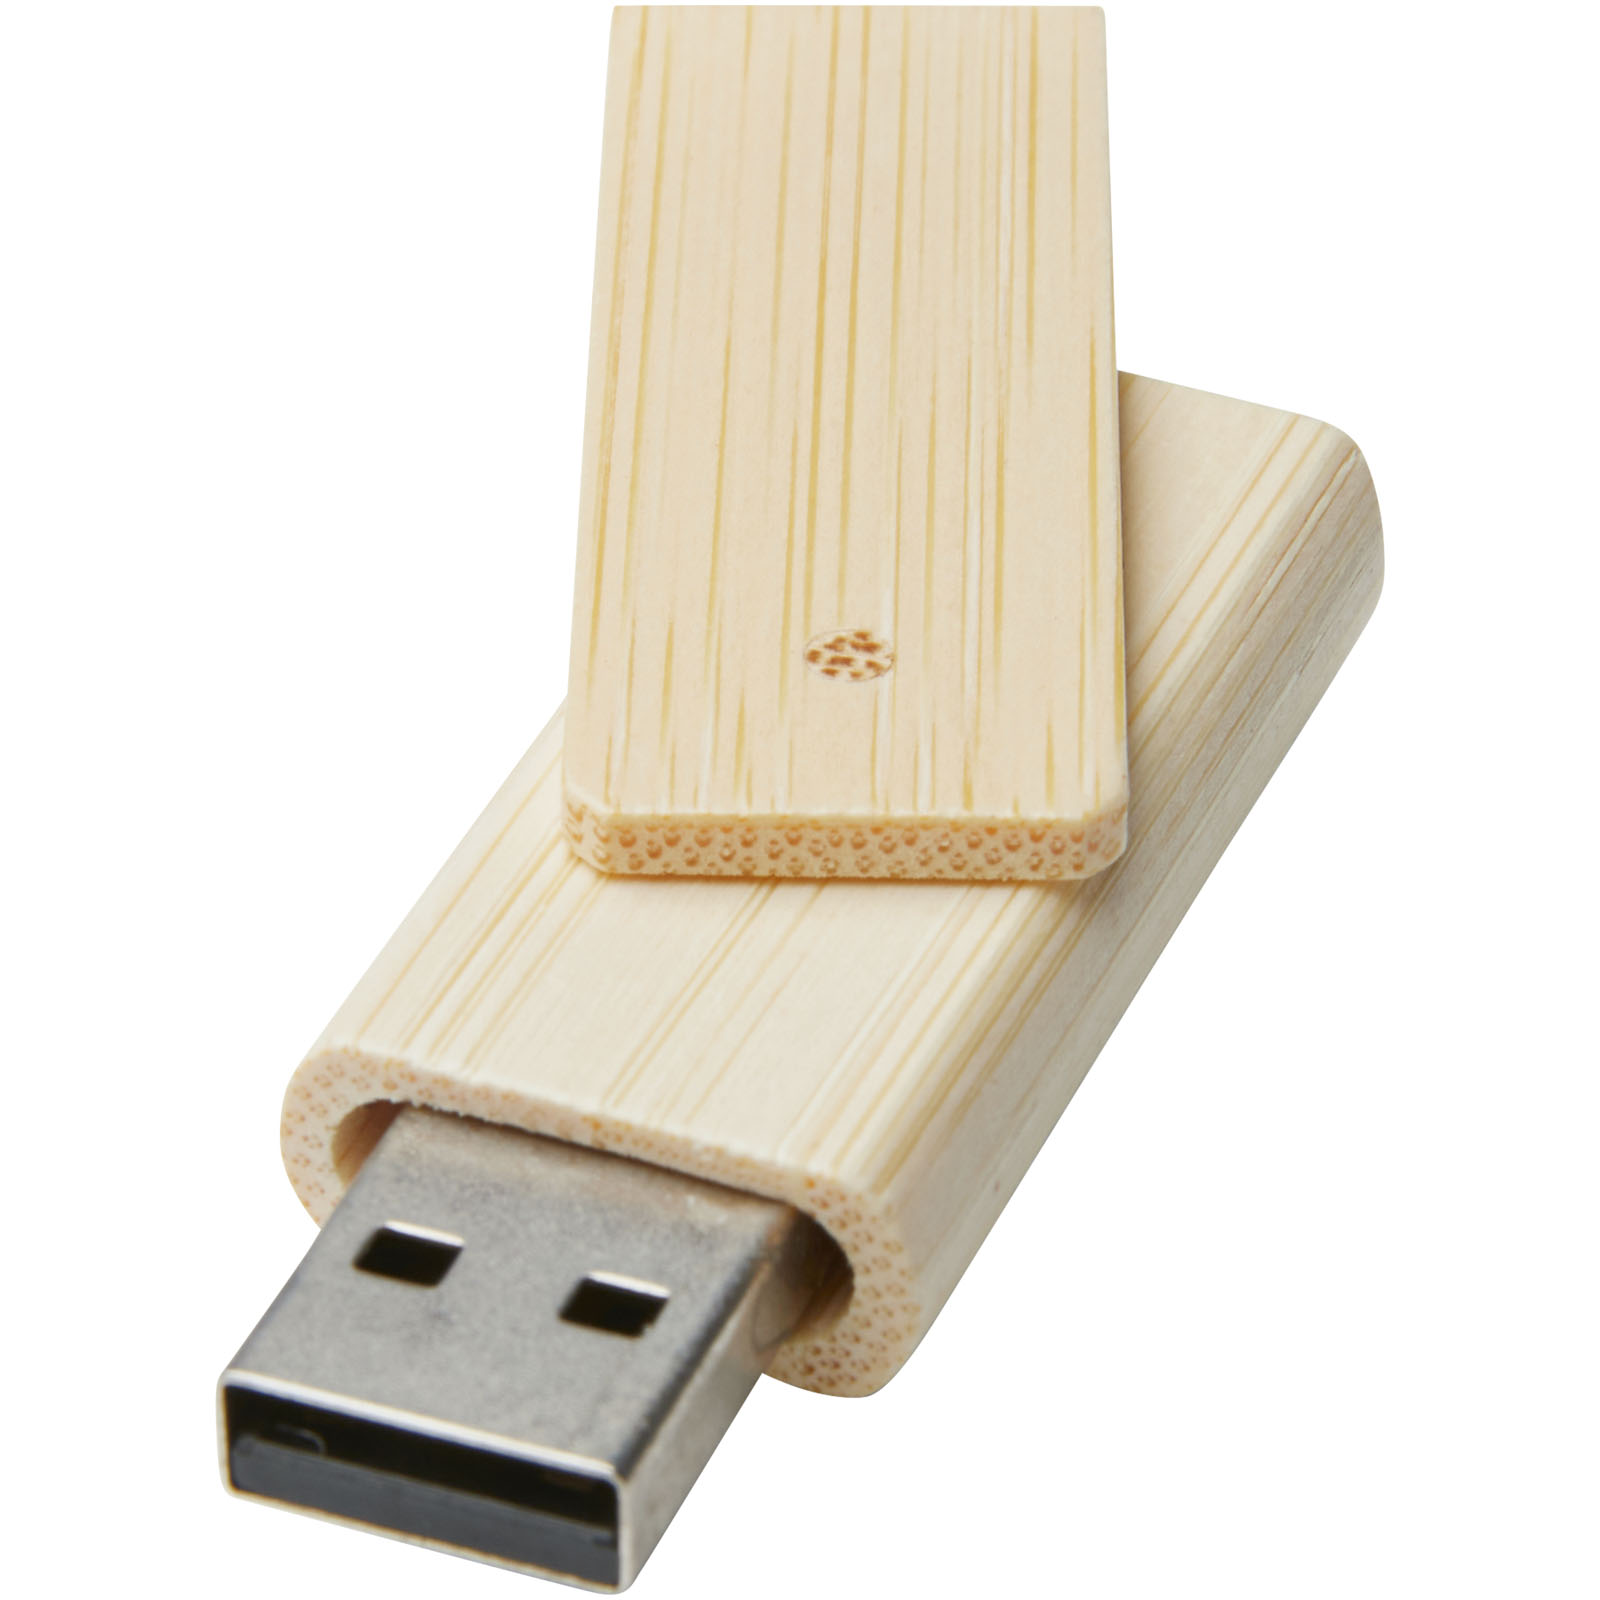 USB Flash Drives - Rotate 8GB bamboo USB flash drive